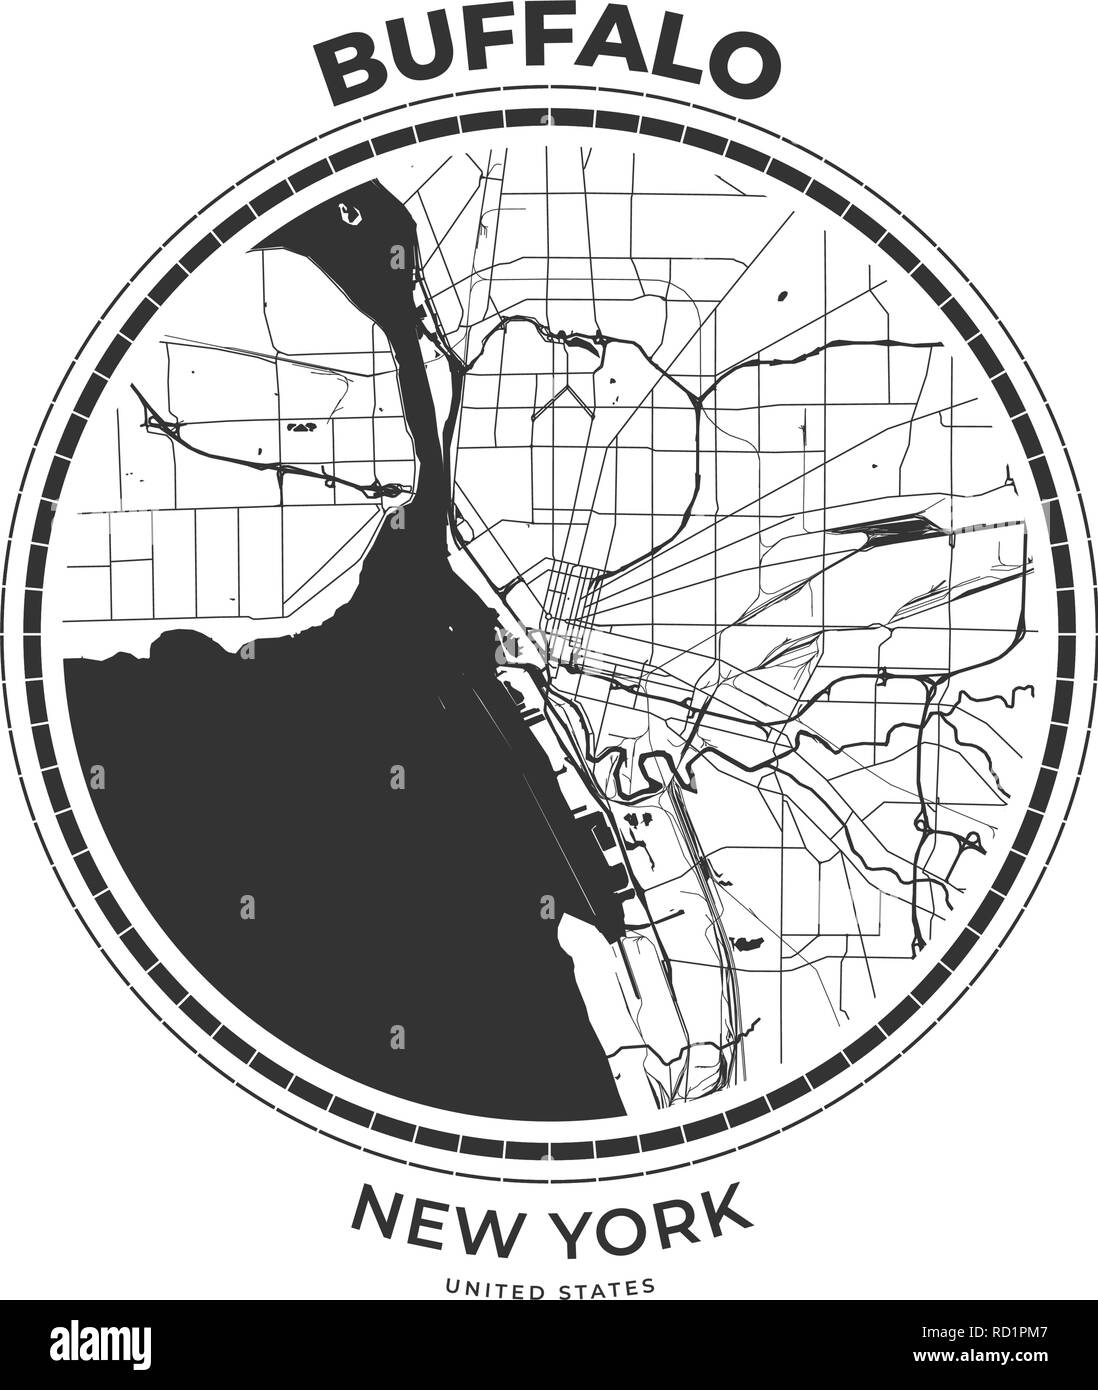 T-shirt badge mappa di Buffalo, New York. Tee shirt Tipografia stampa etichetta emblema distintivo. Illustrazione Vettoriale Illustrazione Vettoriale